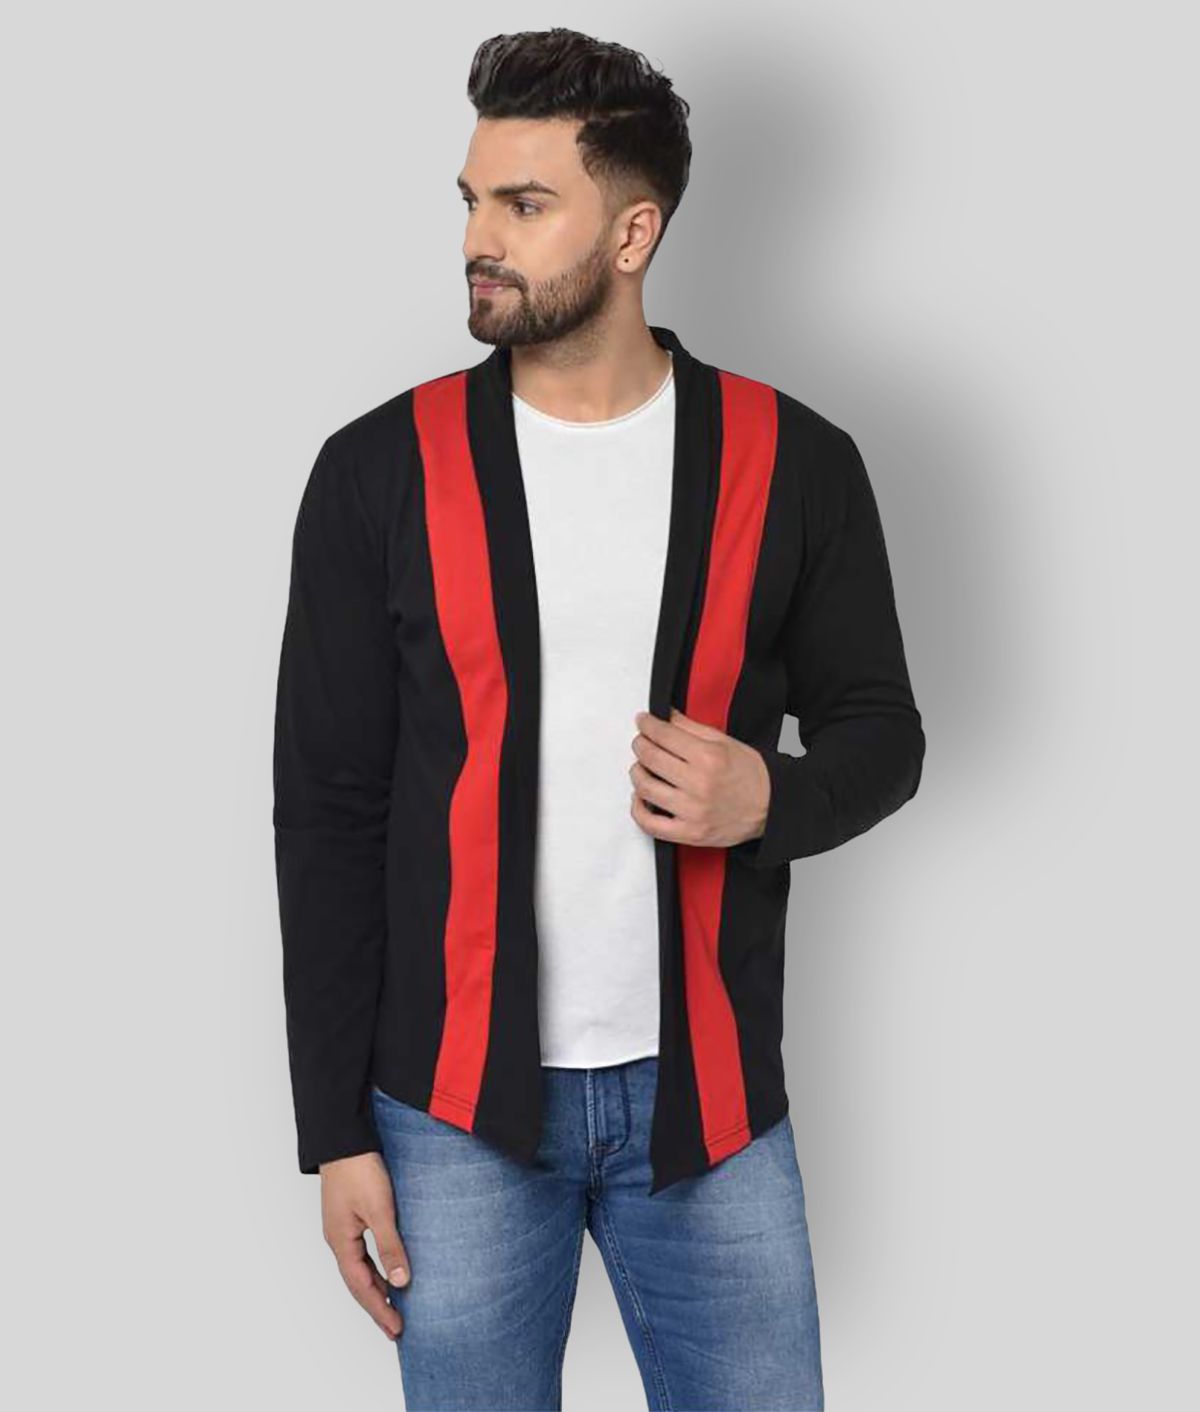     			Glito - Black Cotton Men's Cardigans Sweater ( Pack of 1 )